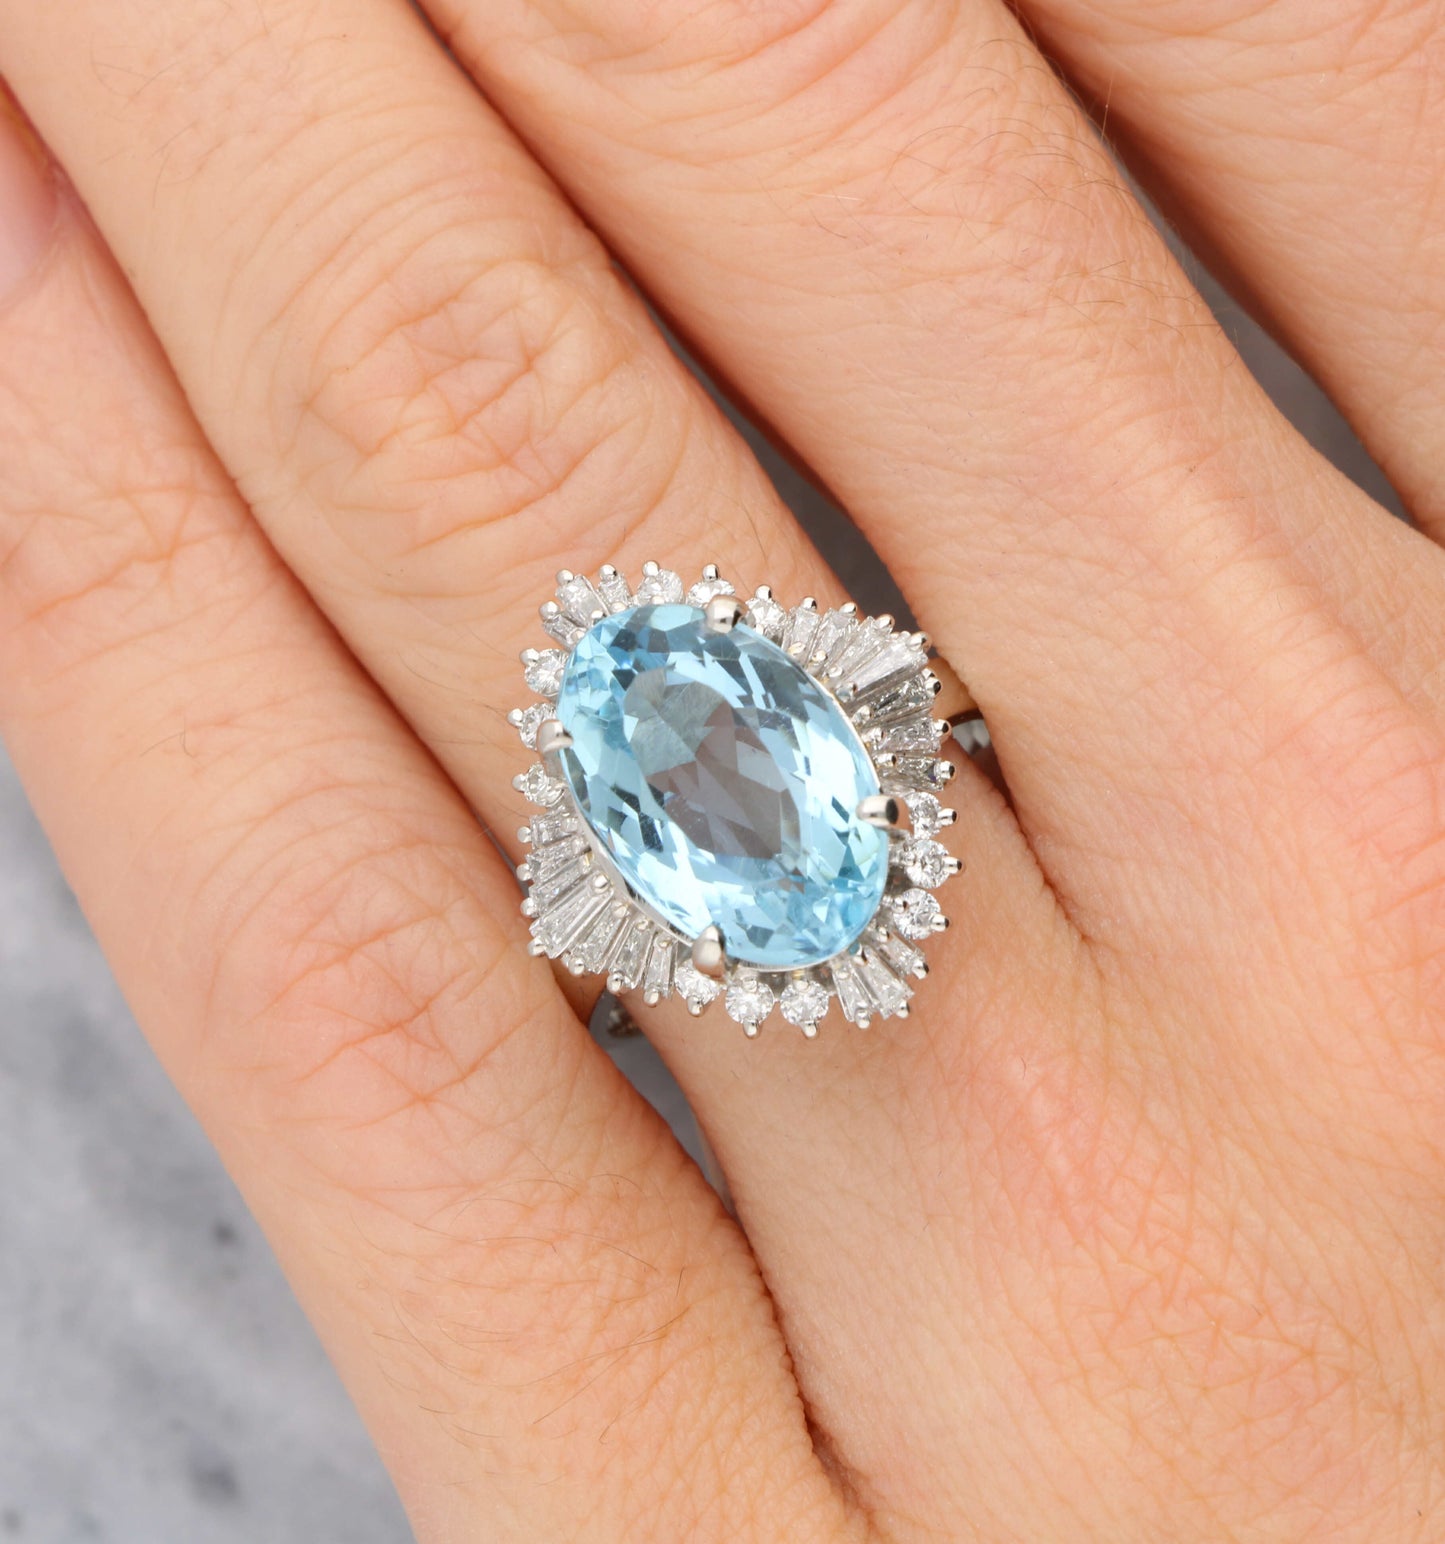 Platinum aquamarine and diamond dress ring